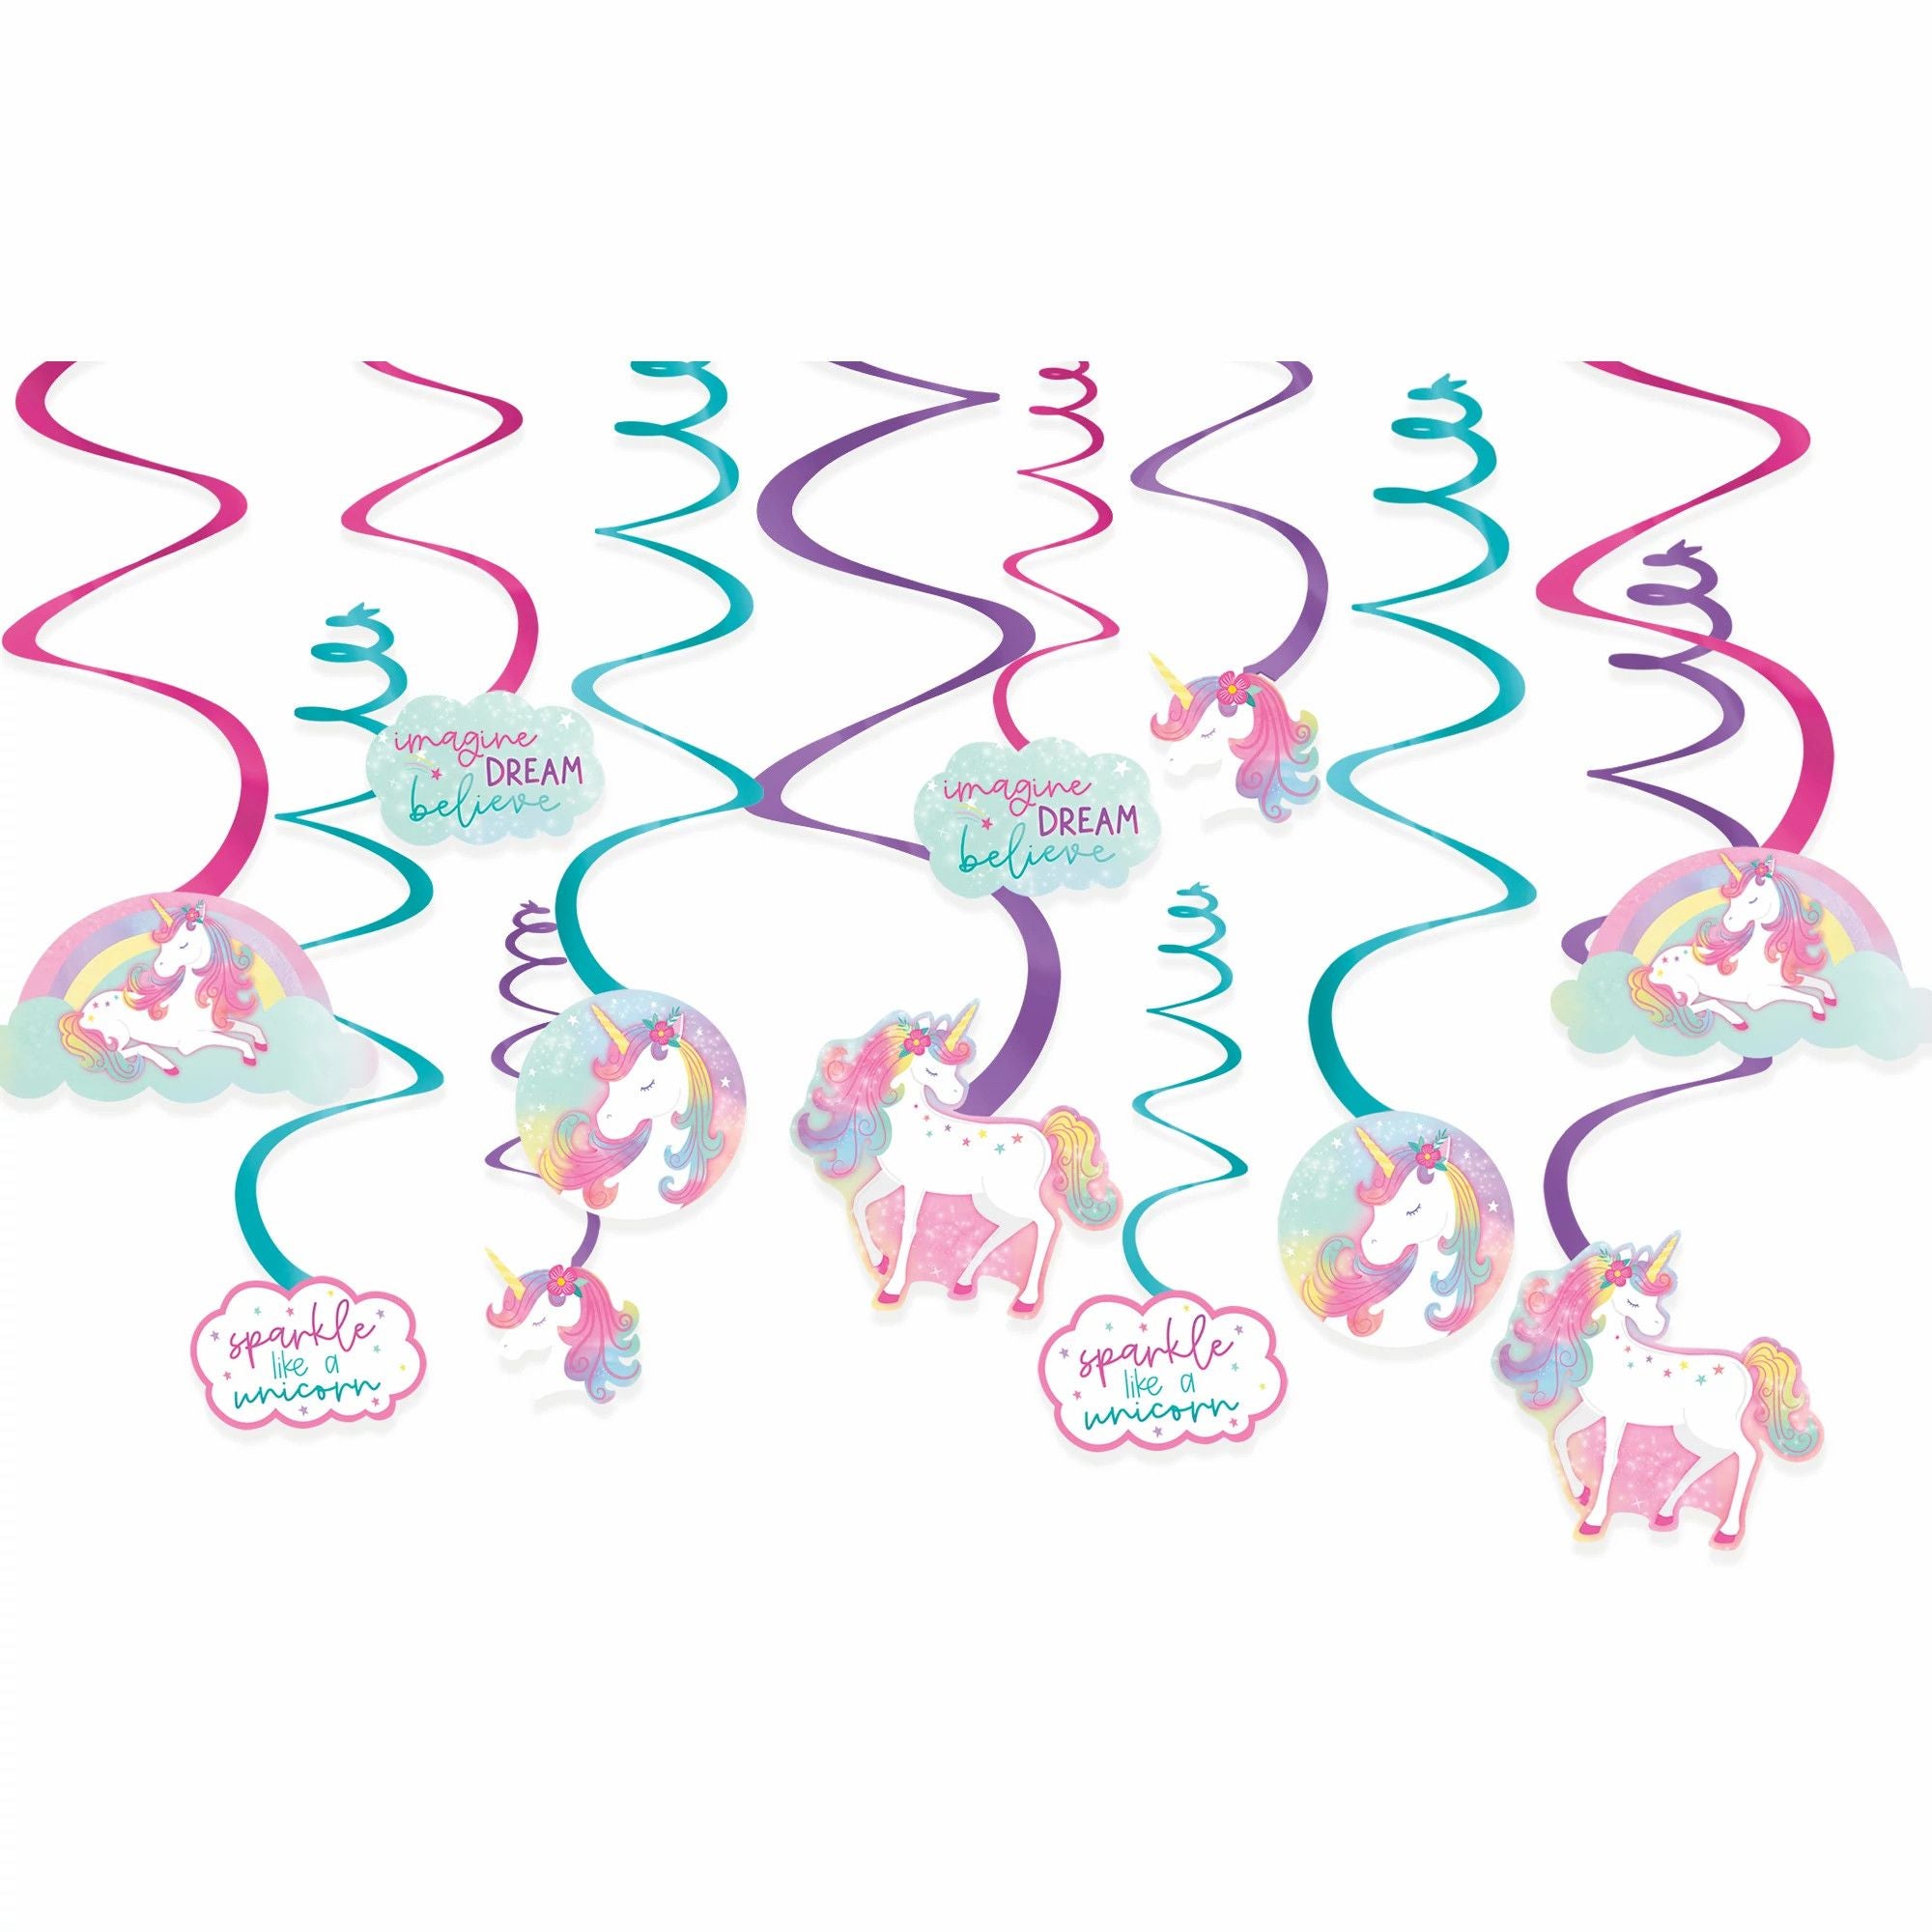 Enchanted unicorn swirls